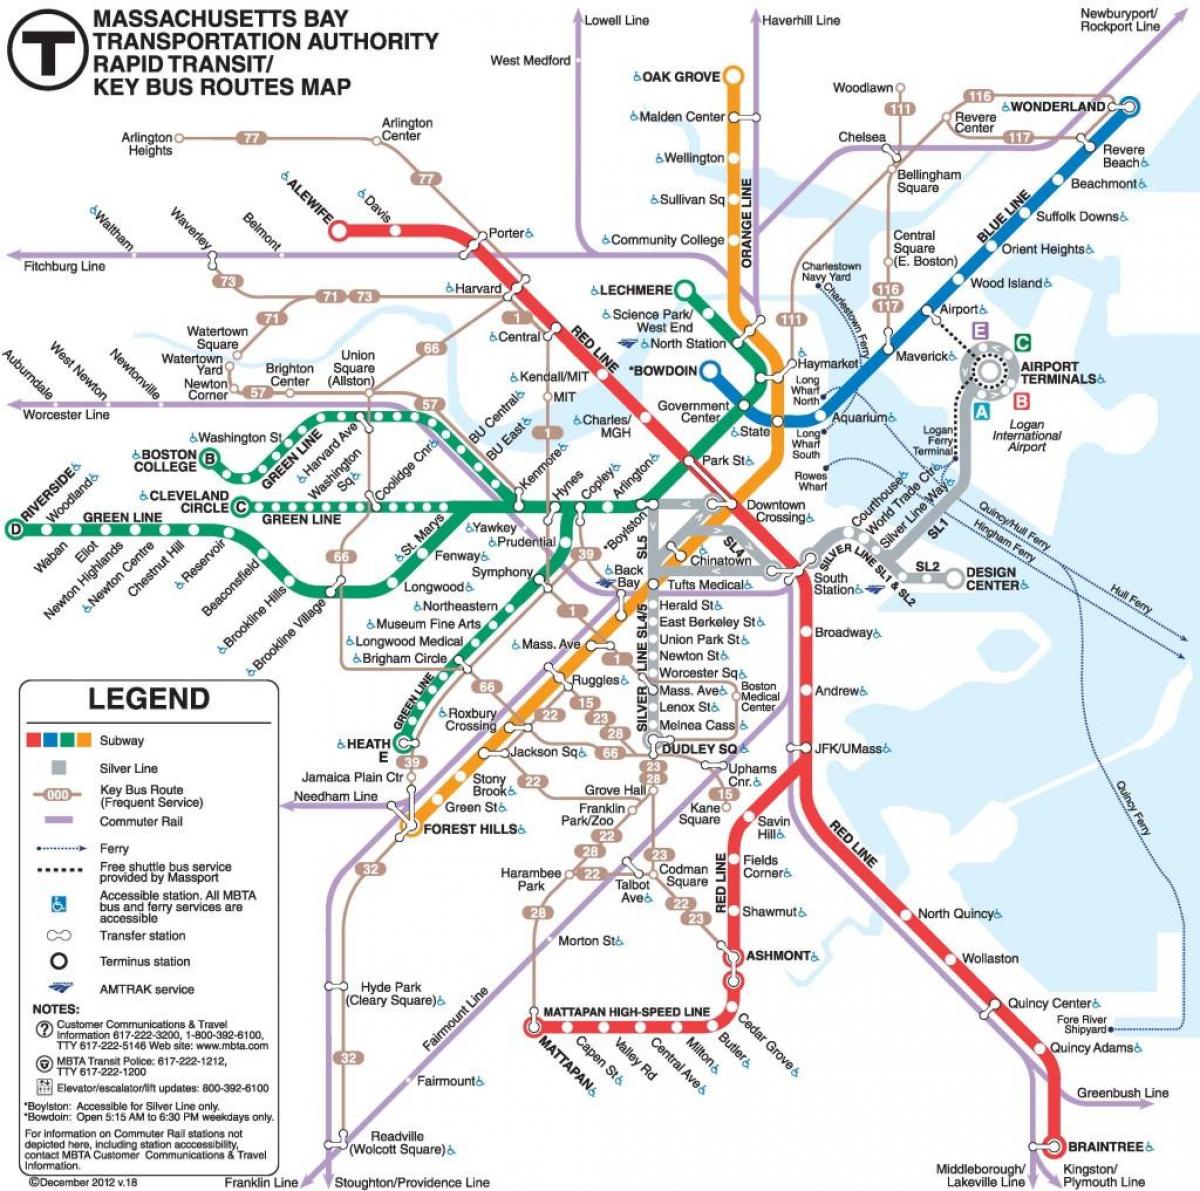 Септа мапи метроа